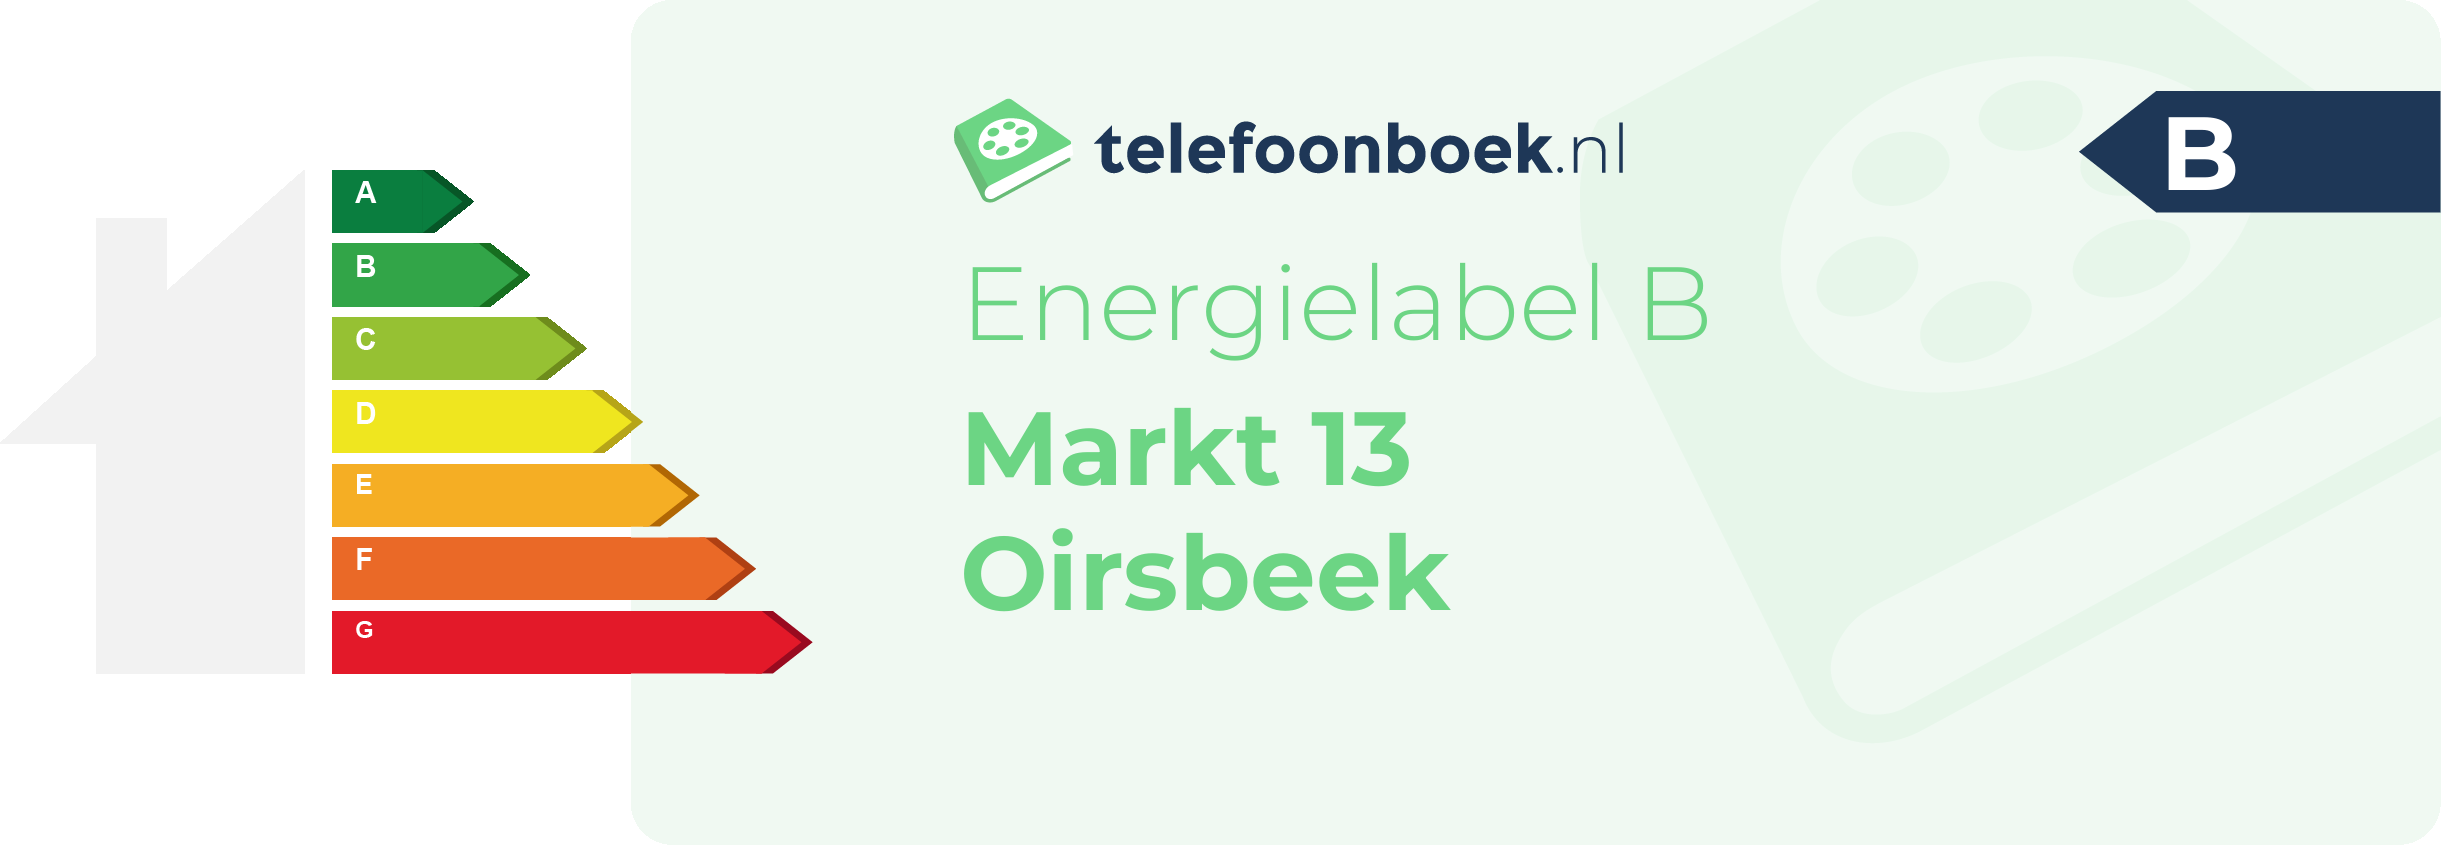 Energielabel Markt 13 Oirsbeek